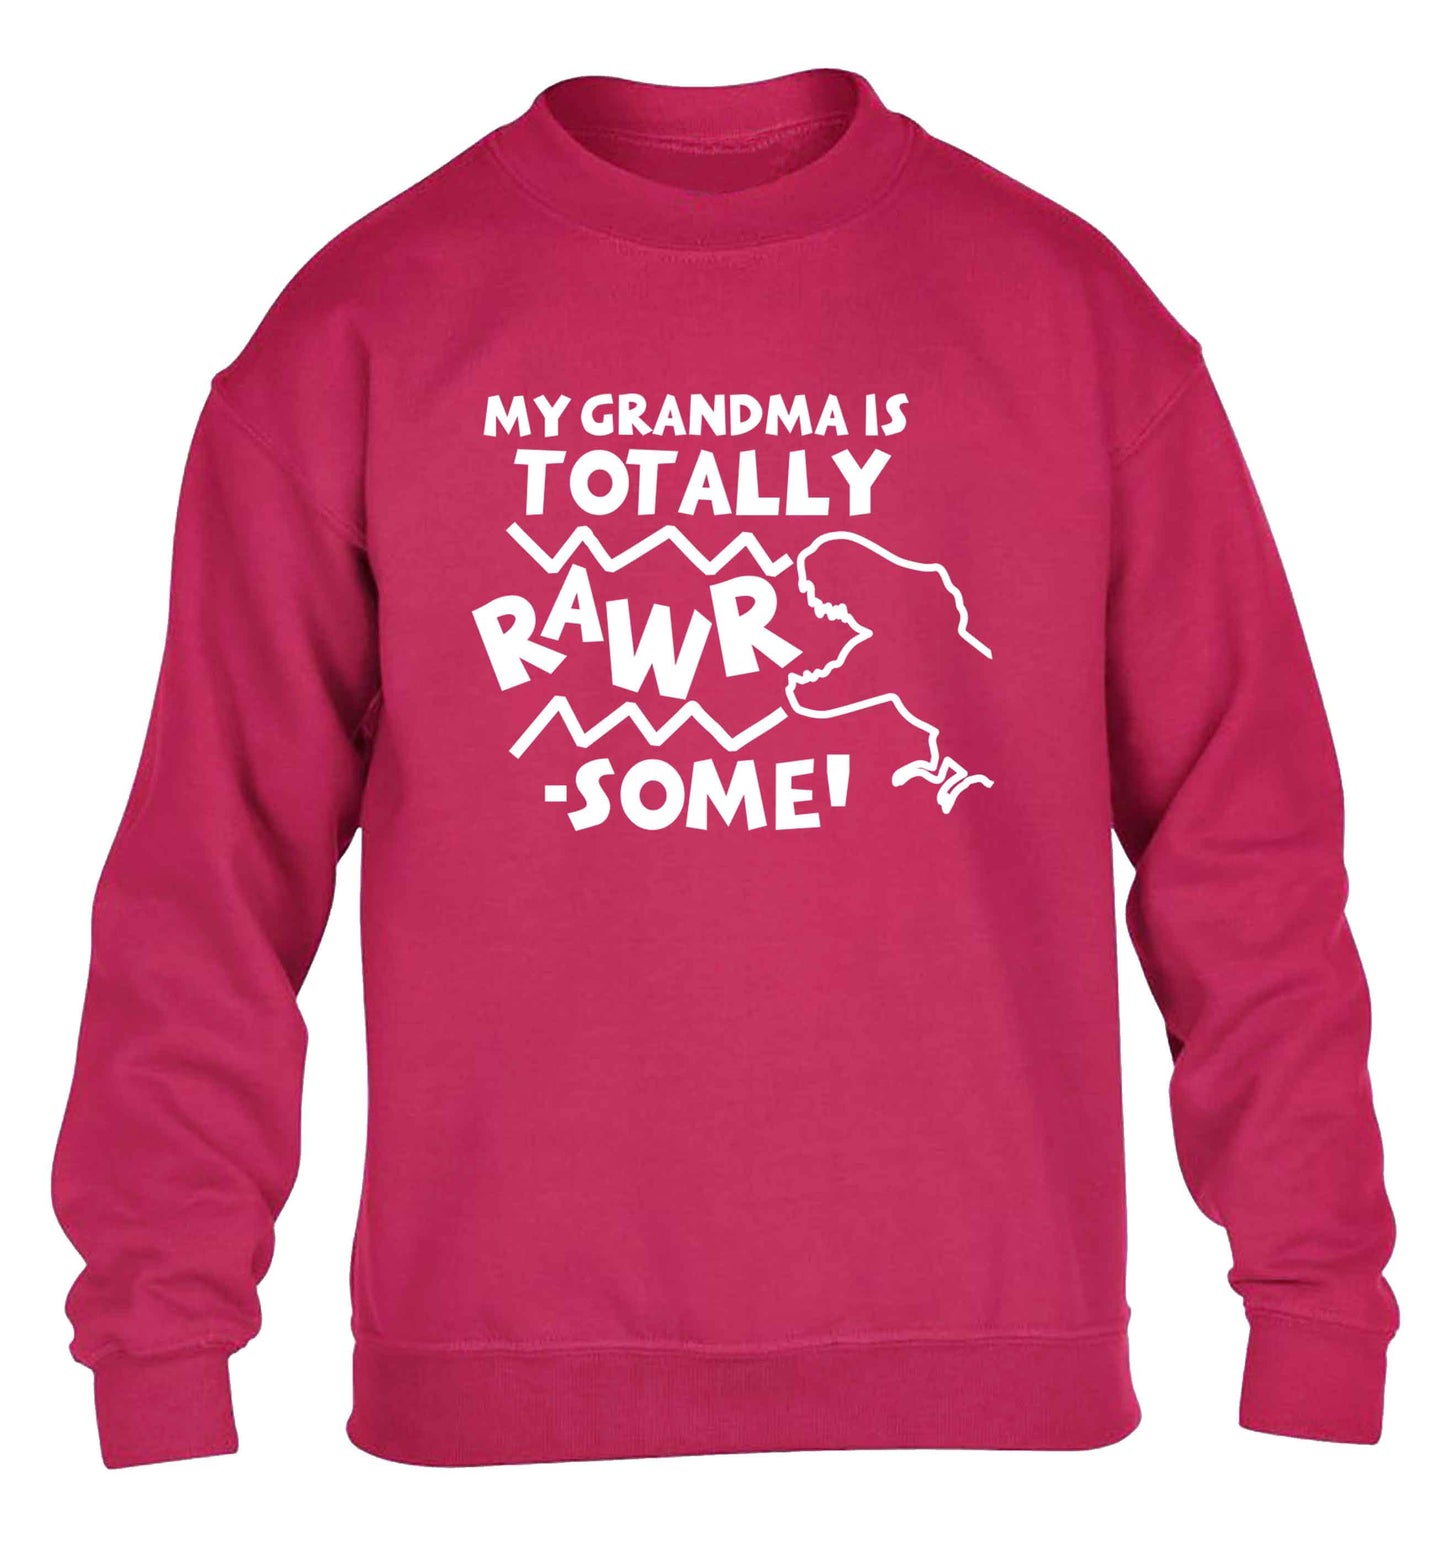 My grandma is totally rawrsome children's pink sweater 12-13 Years